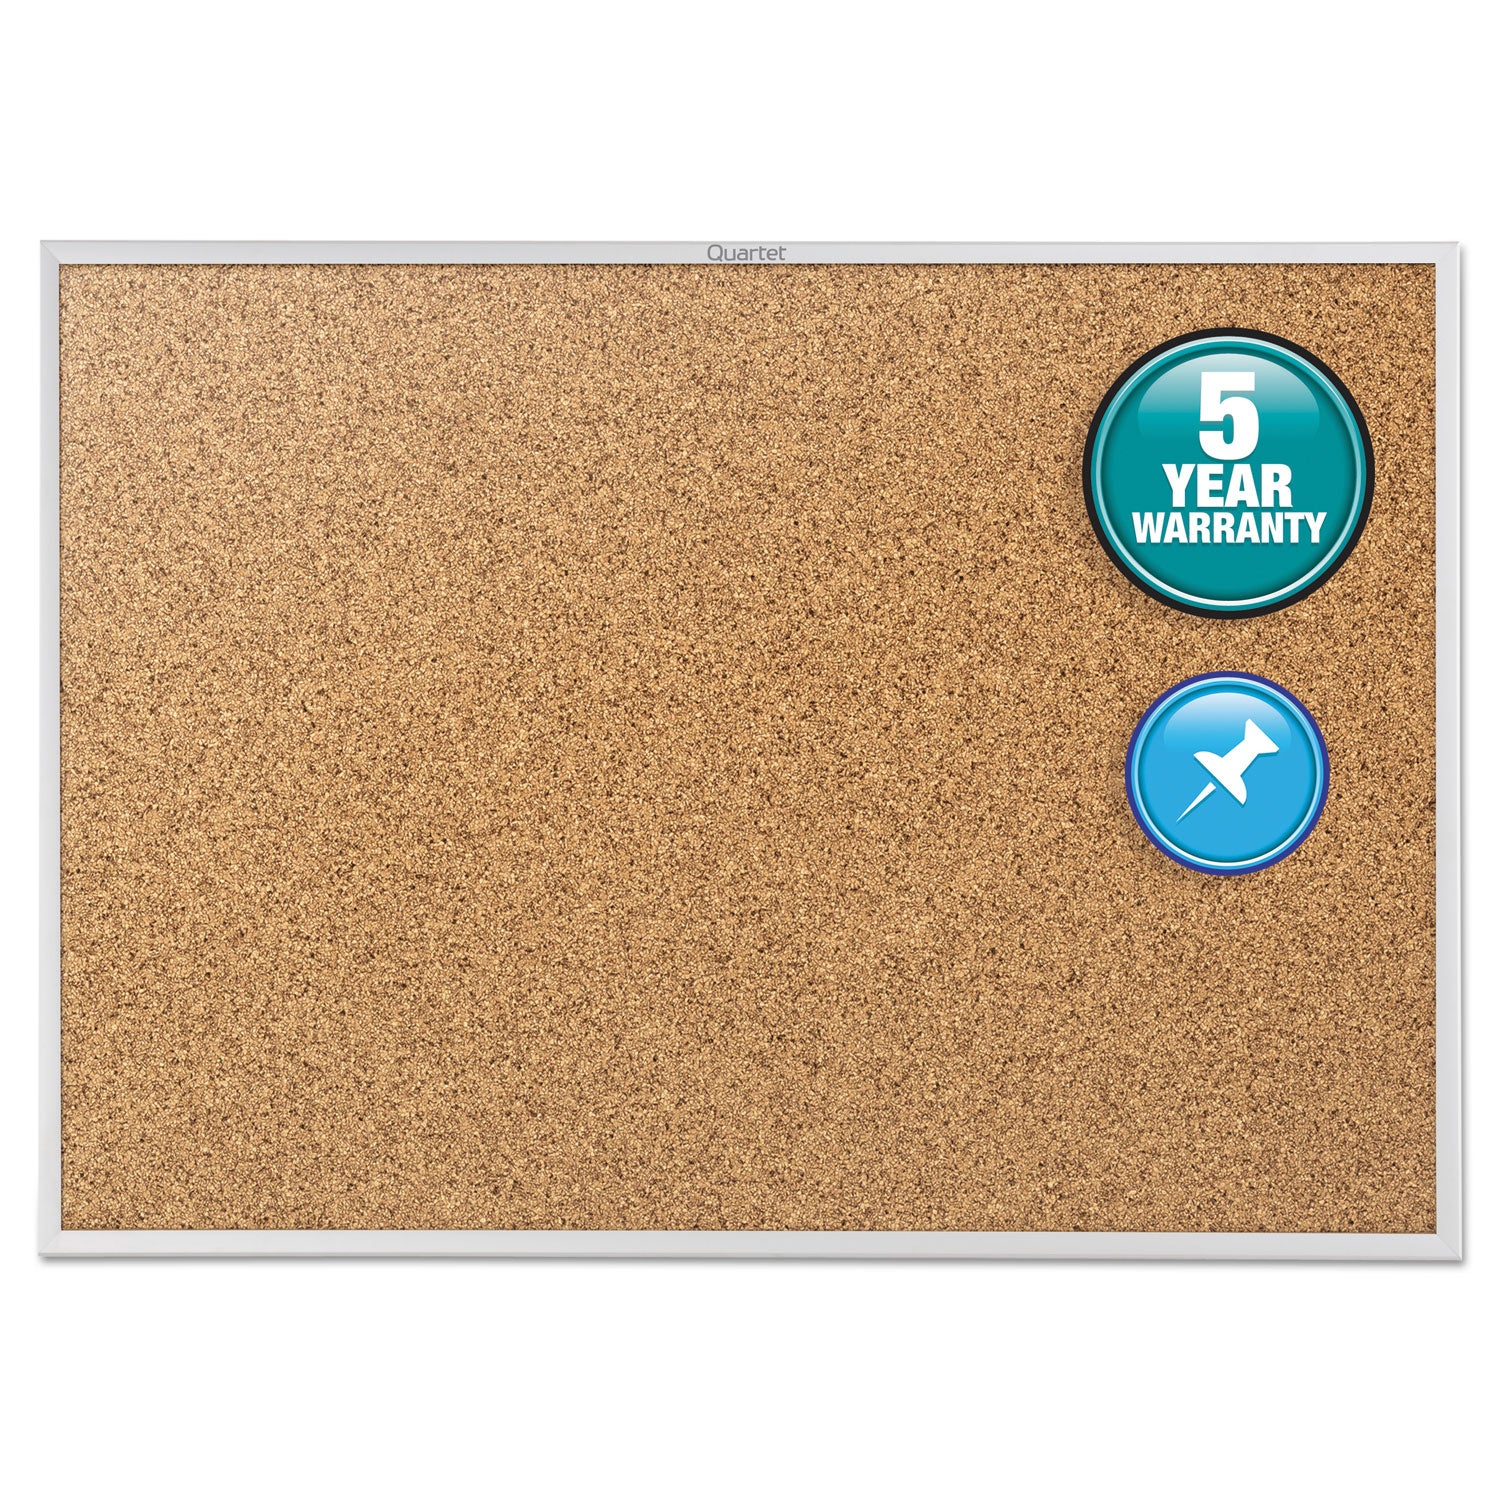 Classic Series Cork Bulletin Board, 36 x 24, Tan Surface, Silver Anodized Aluminum Frame - 